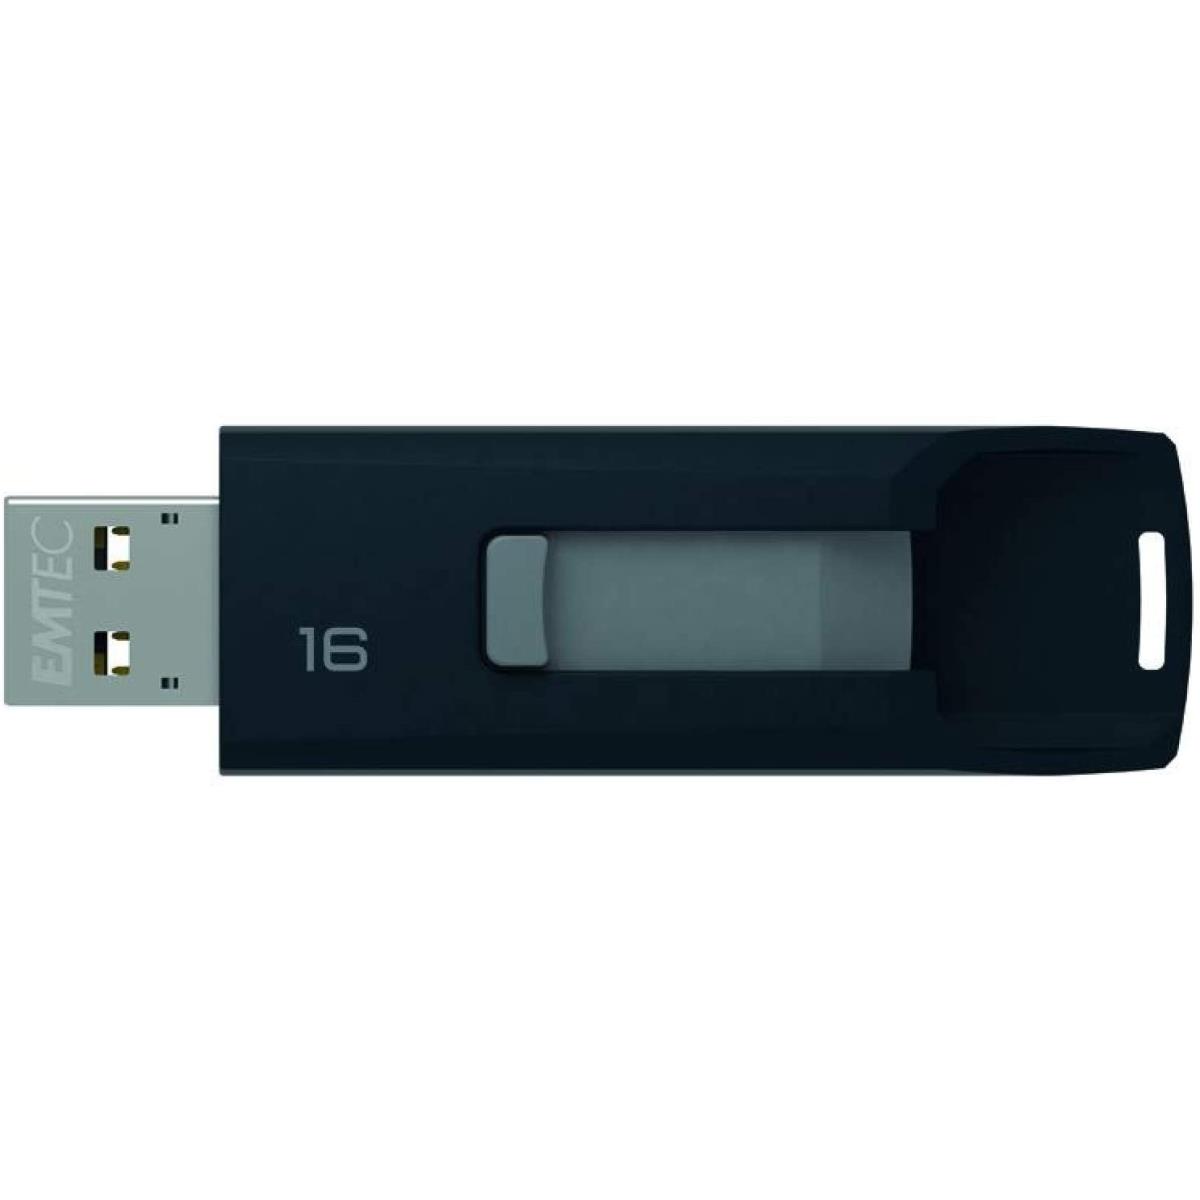 Picture of Emtec EMCMD16GC452 Data Storage Flash Drive - 16GB USB2.0 C450 Slide